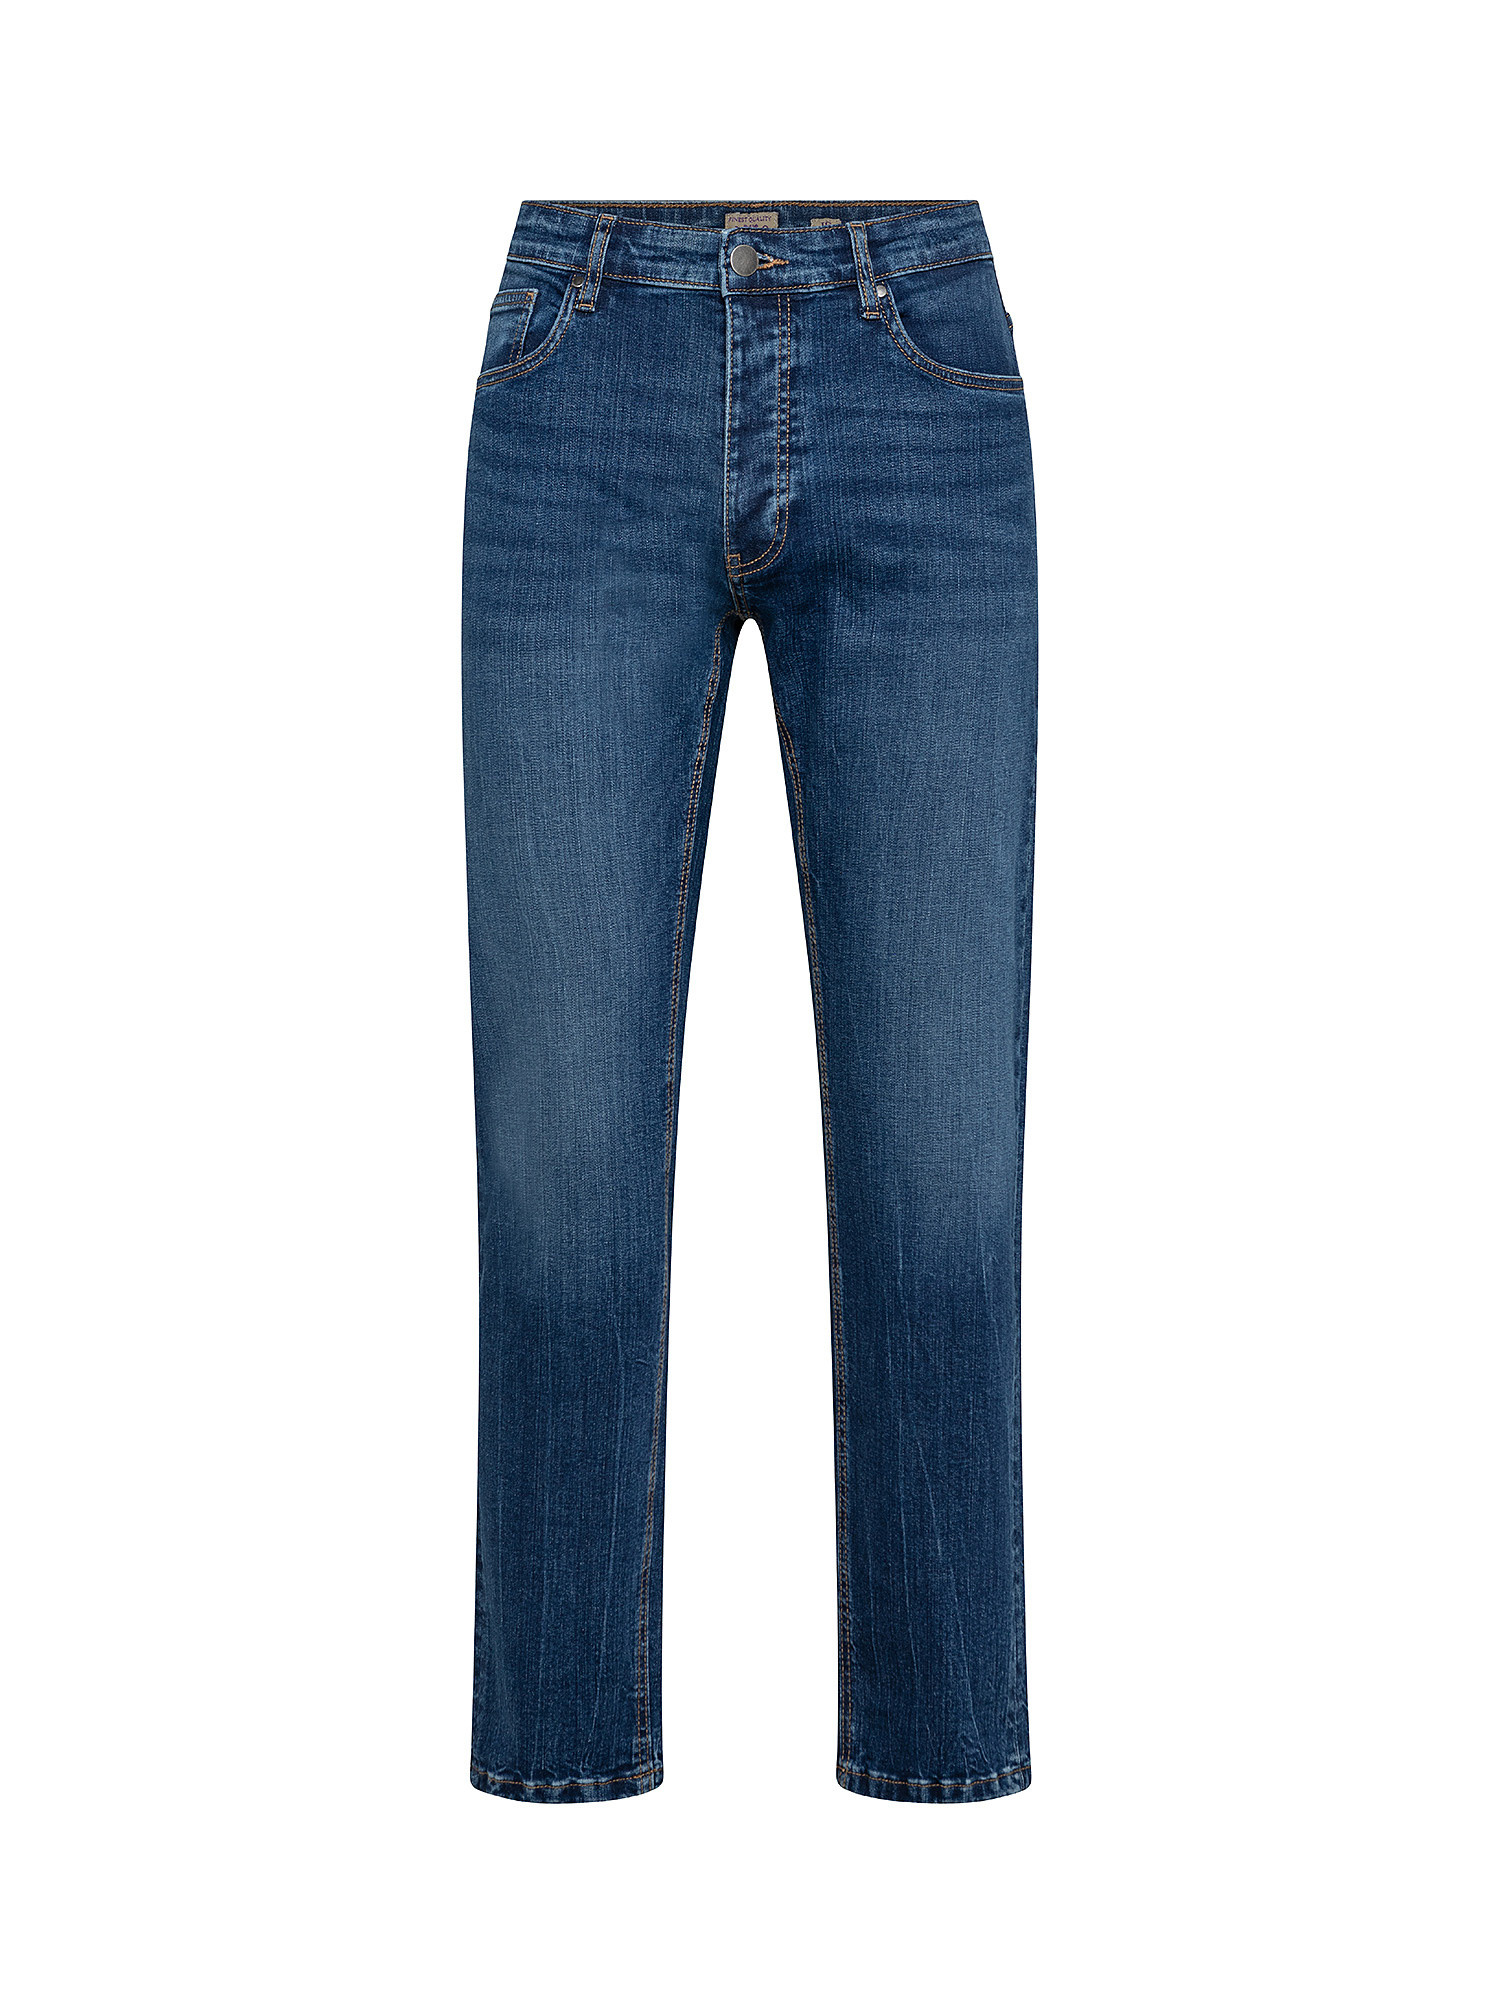 Jeans cinque tasche, Blu chiaro, large image number 0